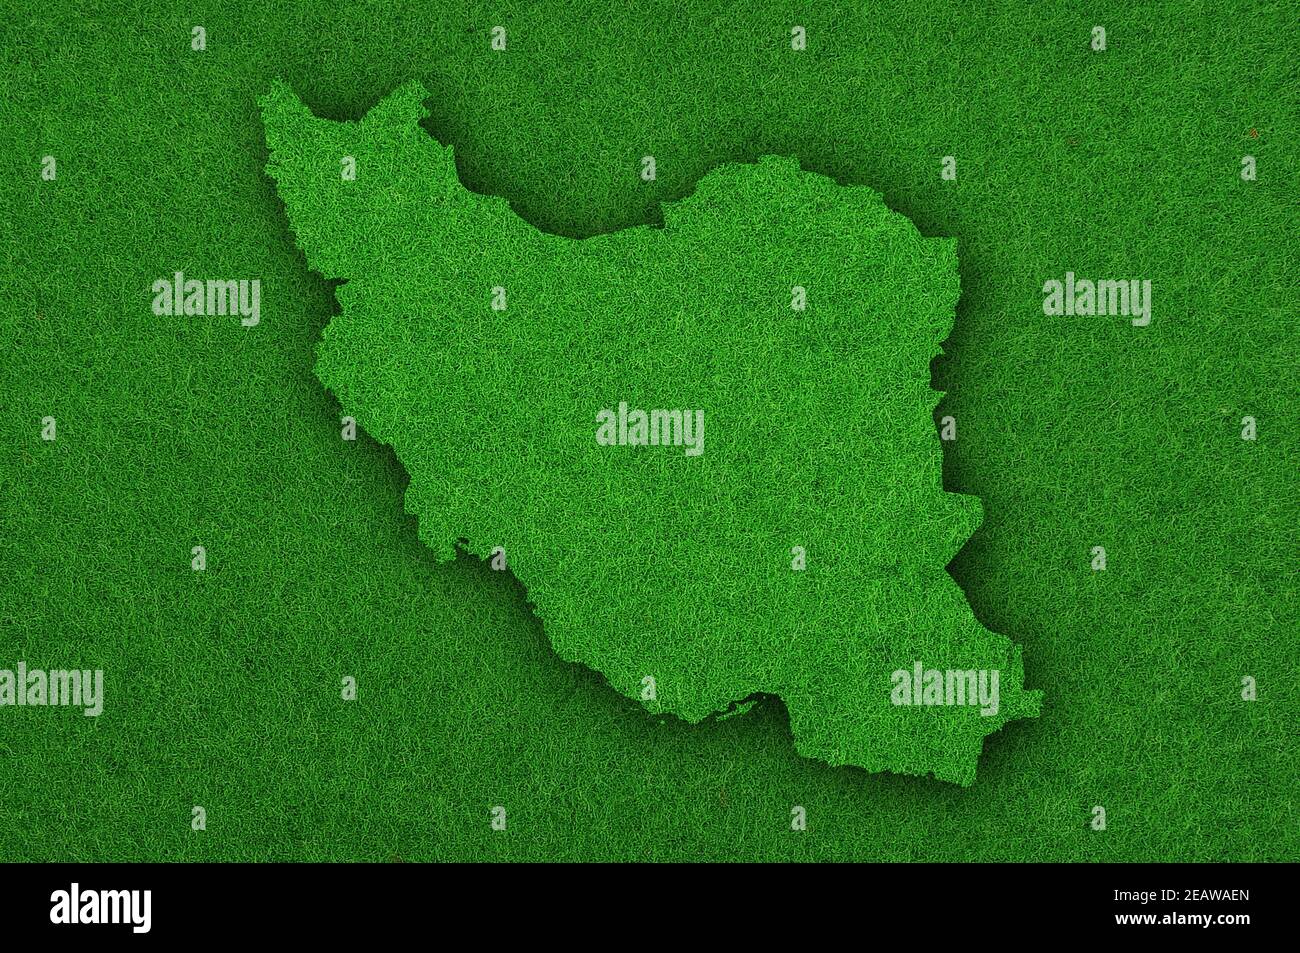 Map of Iran on green felt Stock Photo